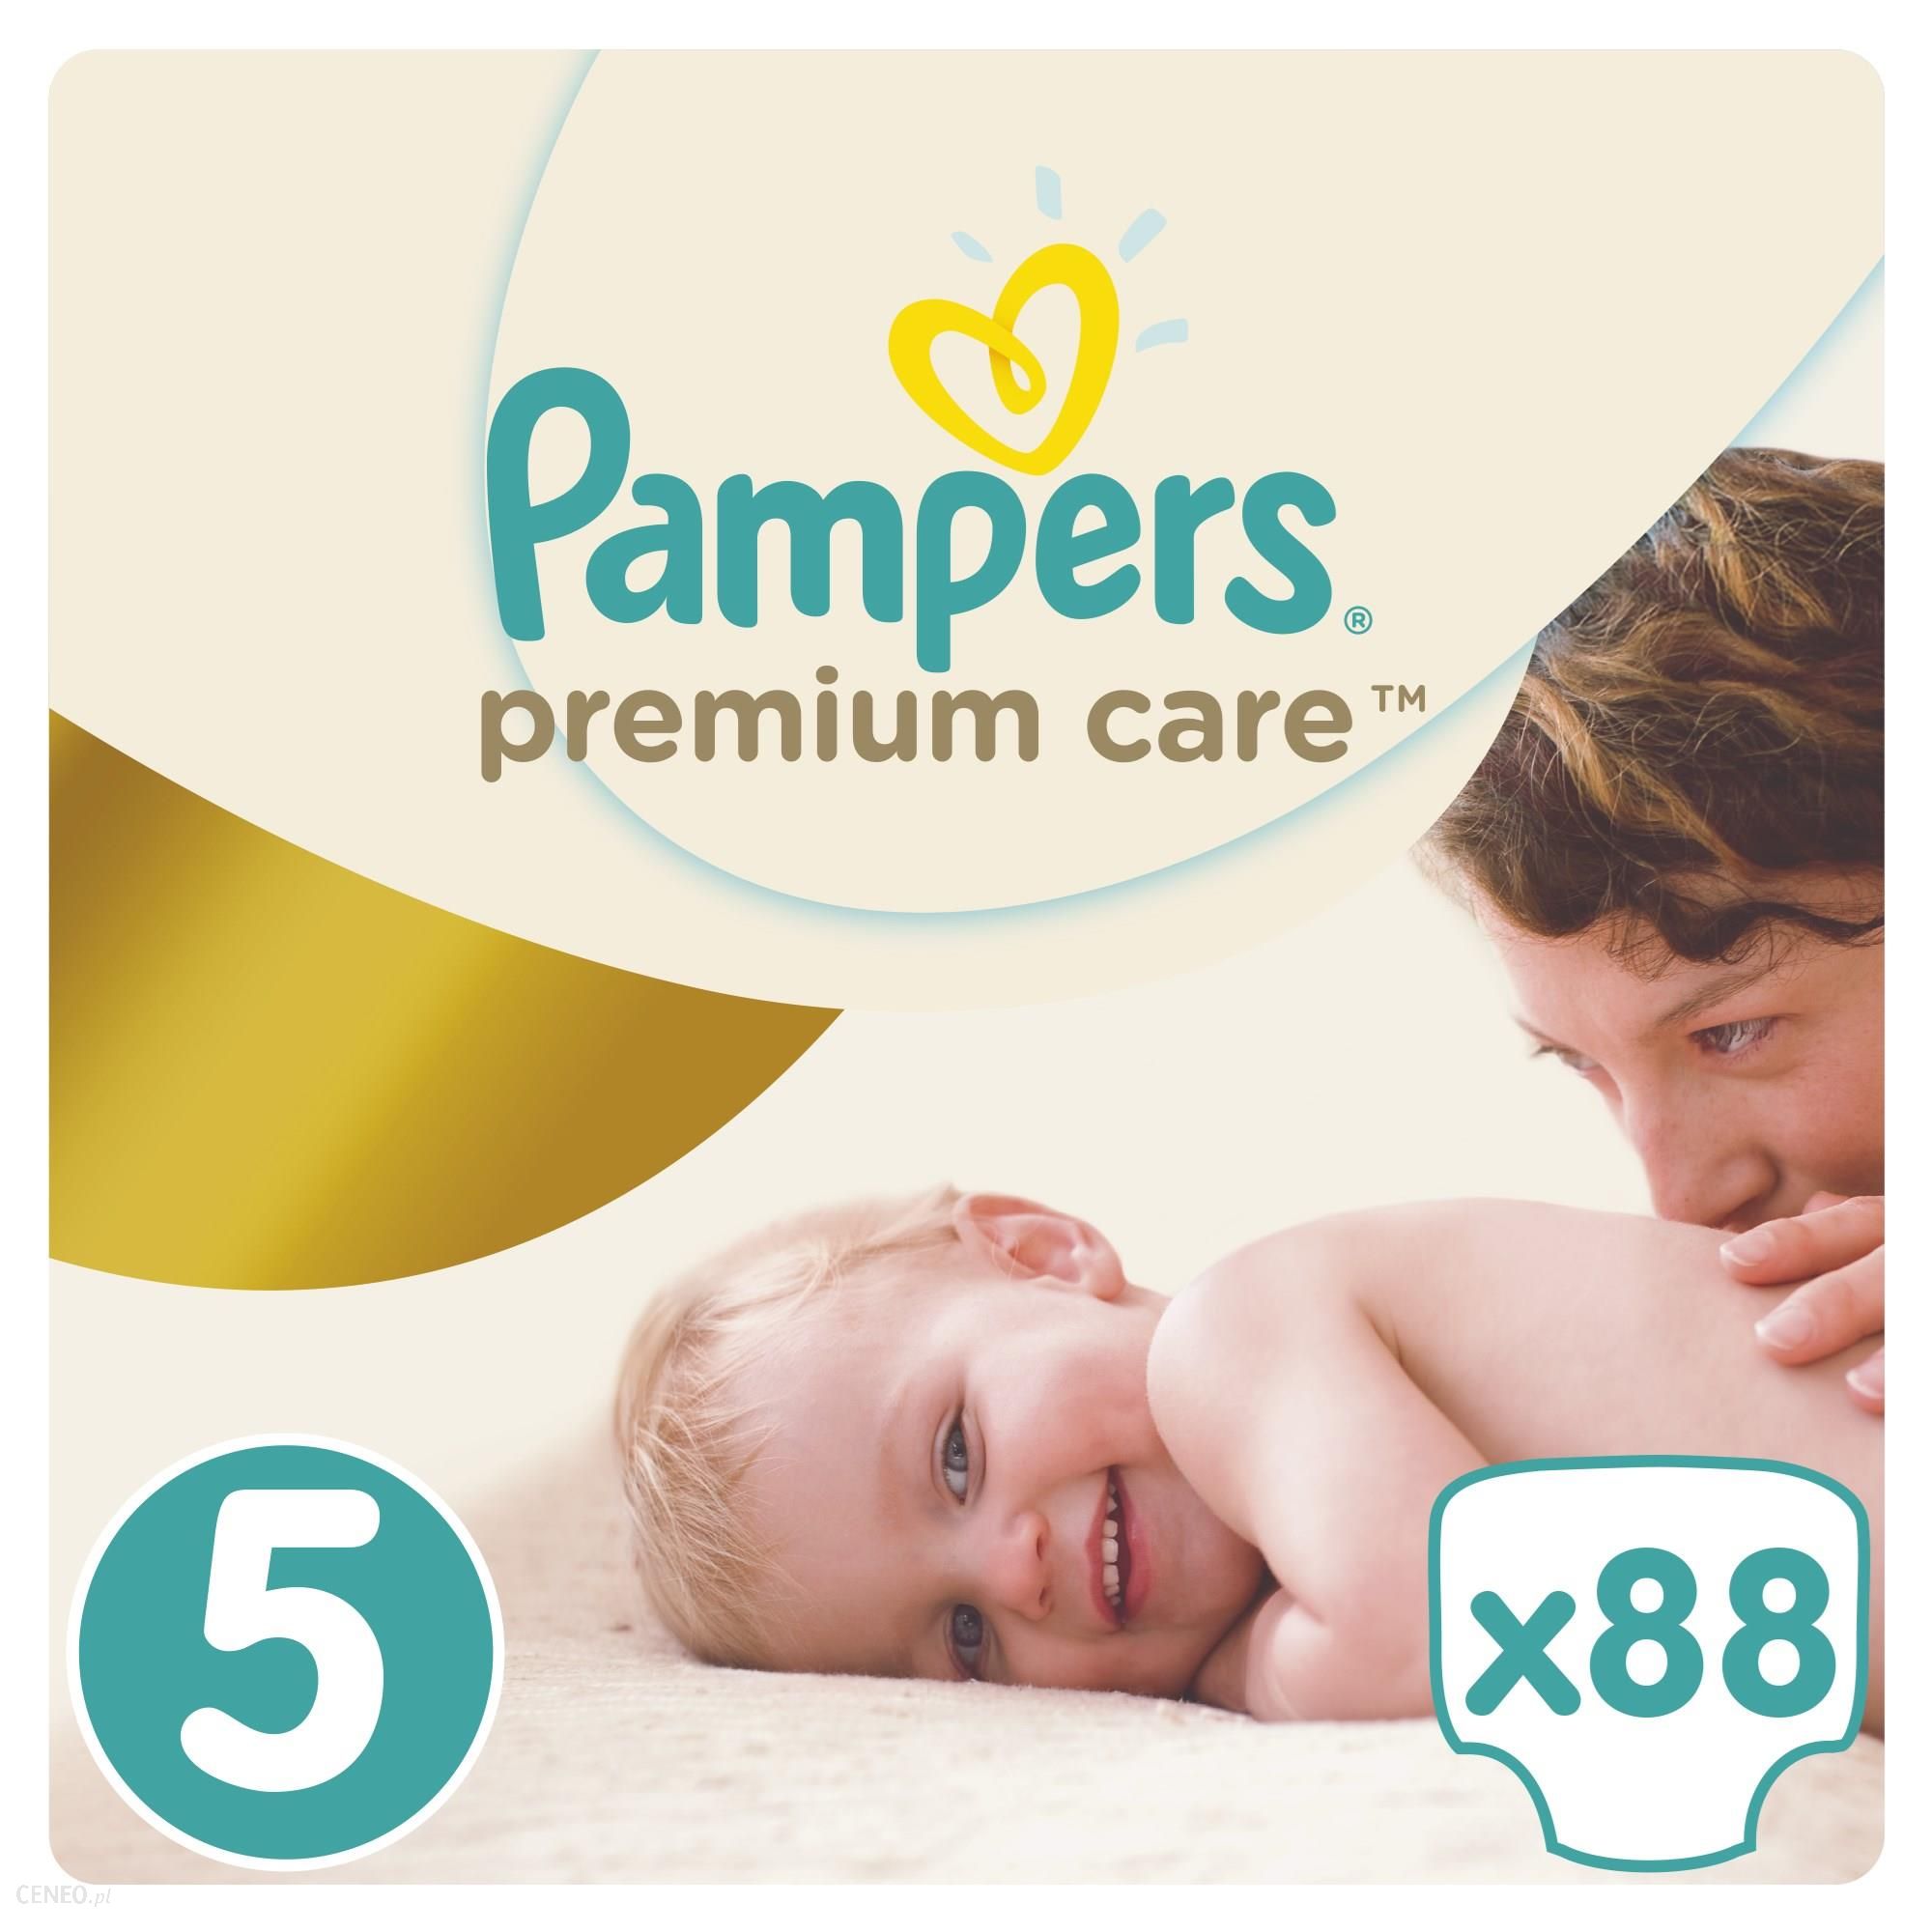 ceneo pampers 1 premium care vs newborn